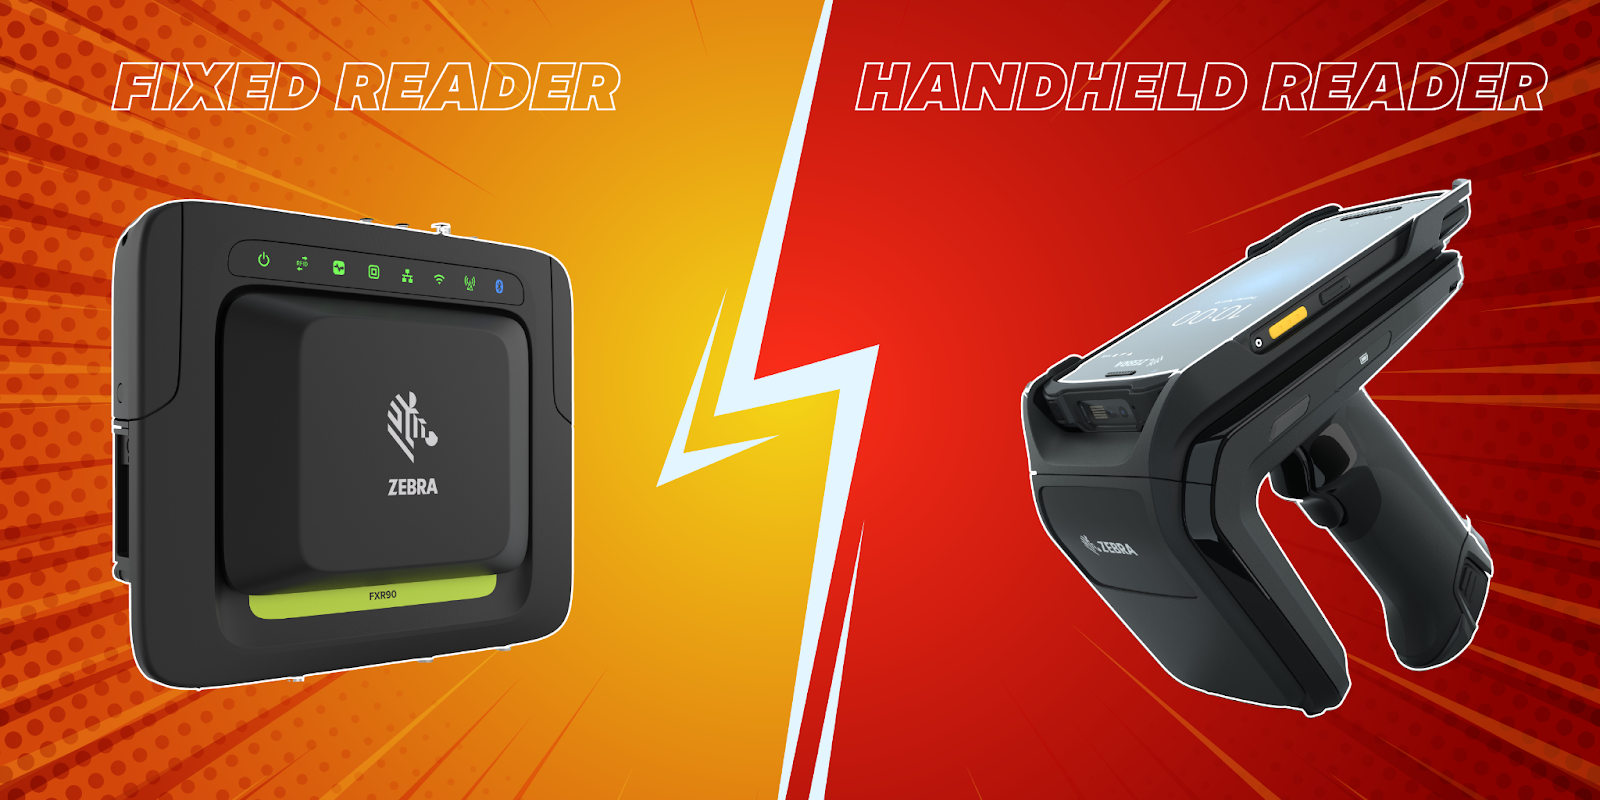 RFID Handheld Readers and Fixed Readers